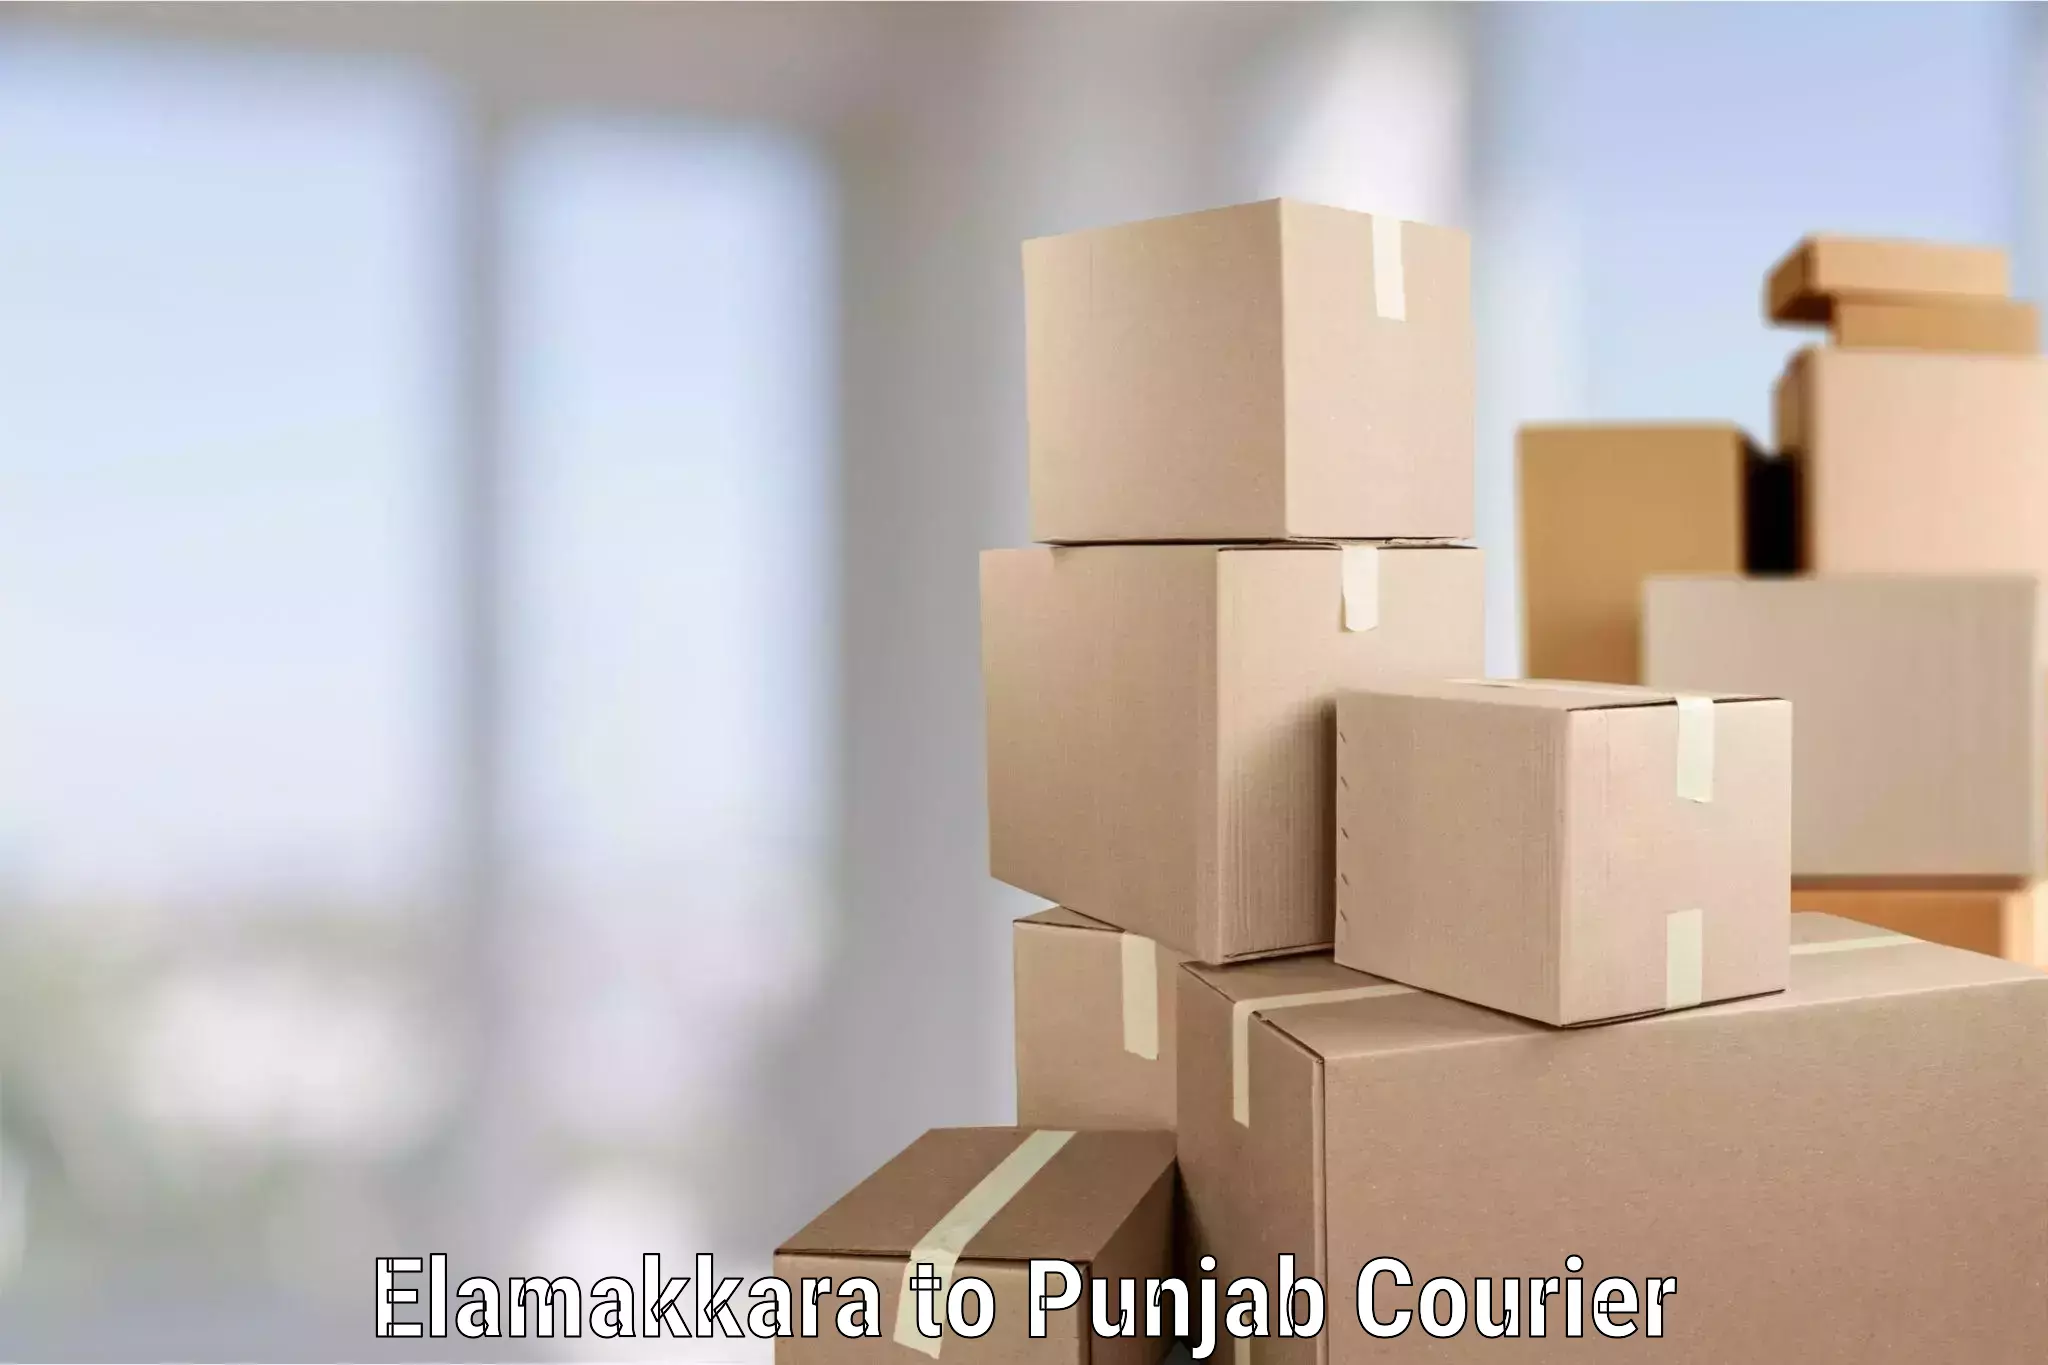 Professional moving company Elamakkara to Dinanagar